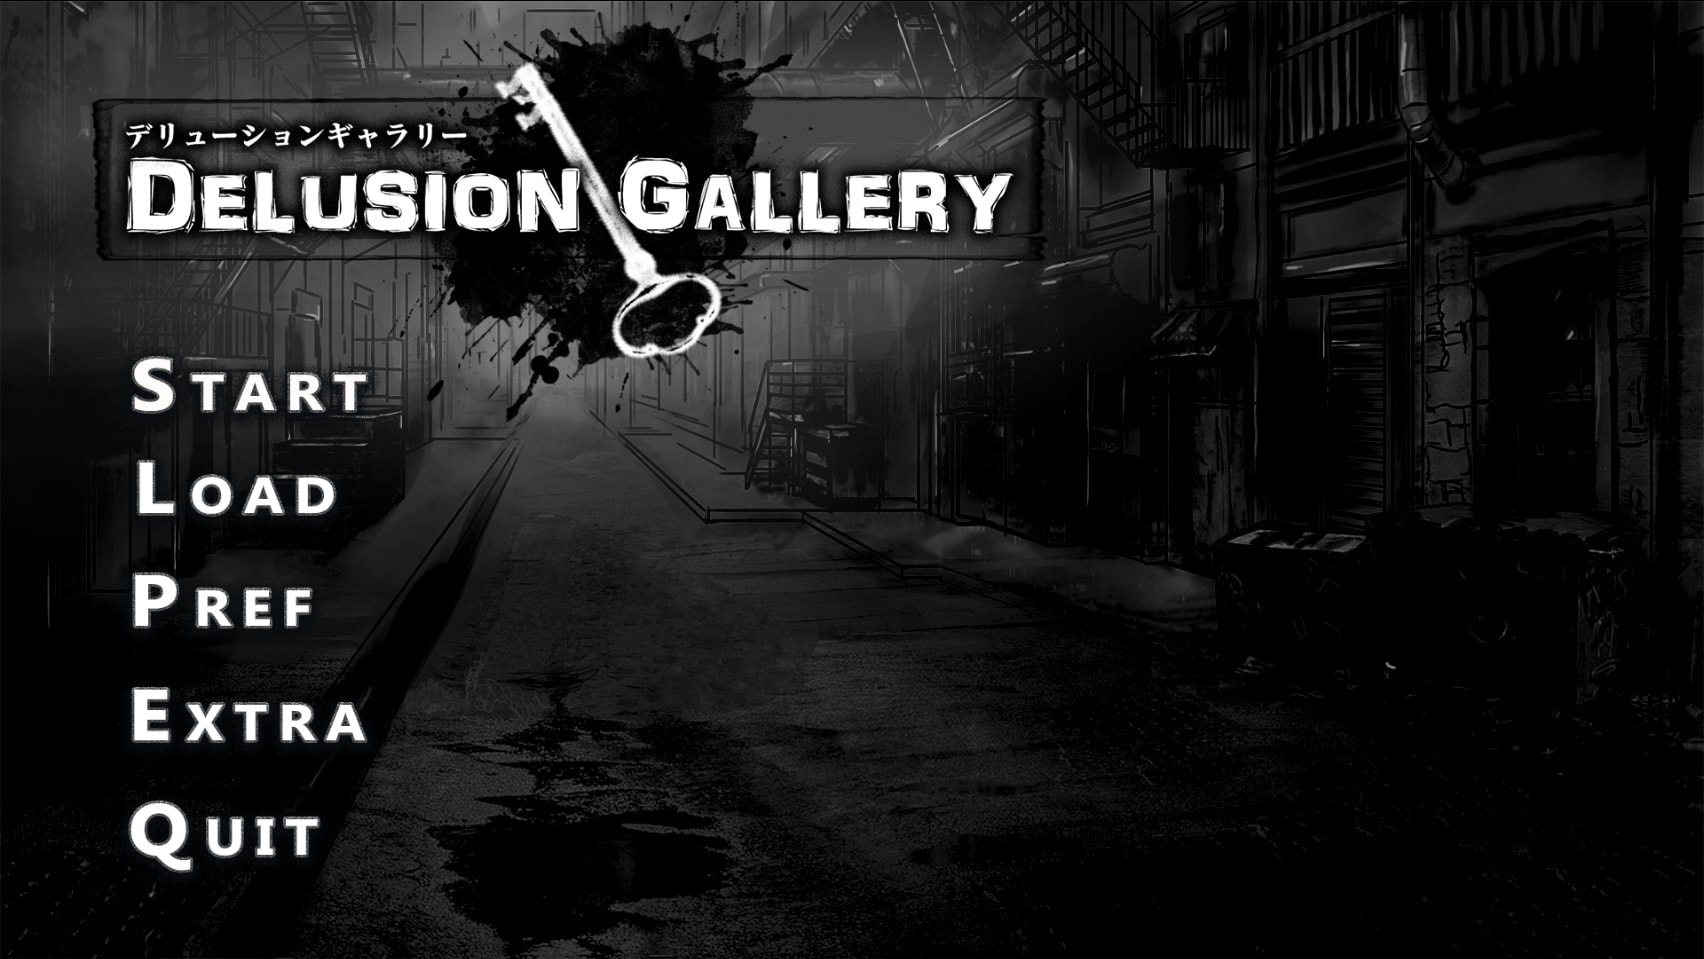 Delusion Gallery main menu screen